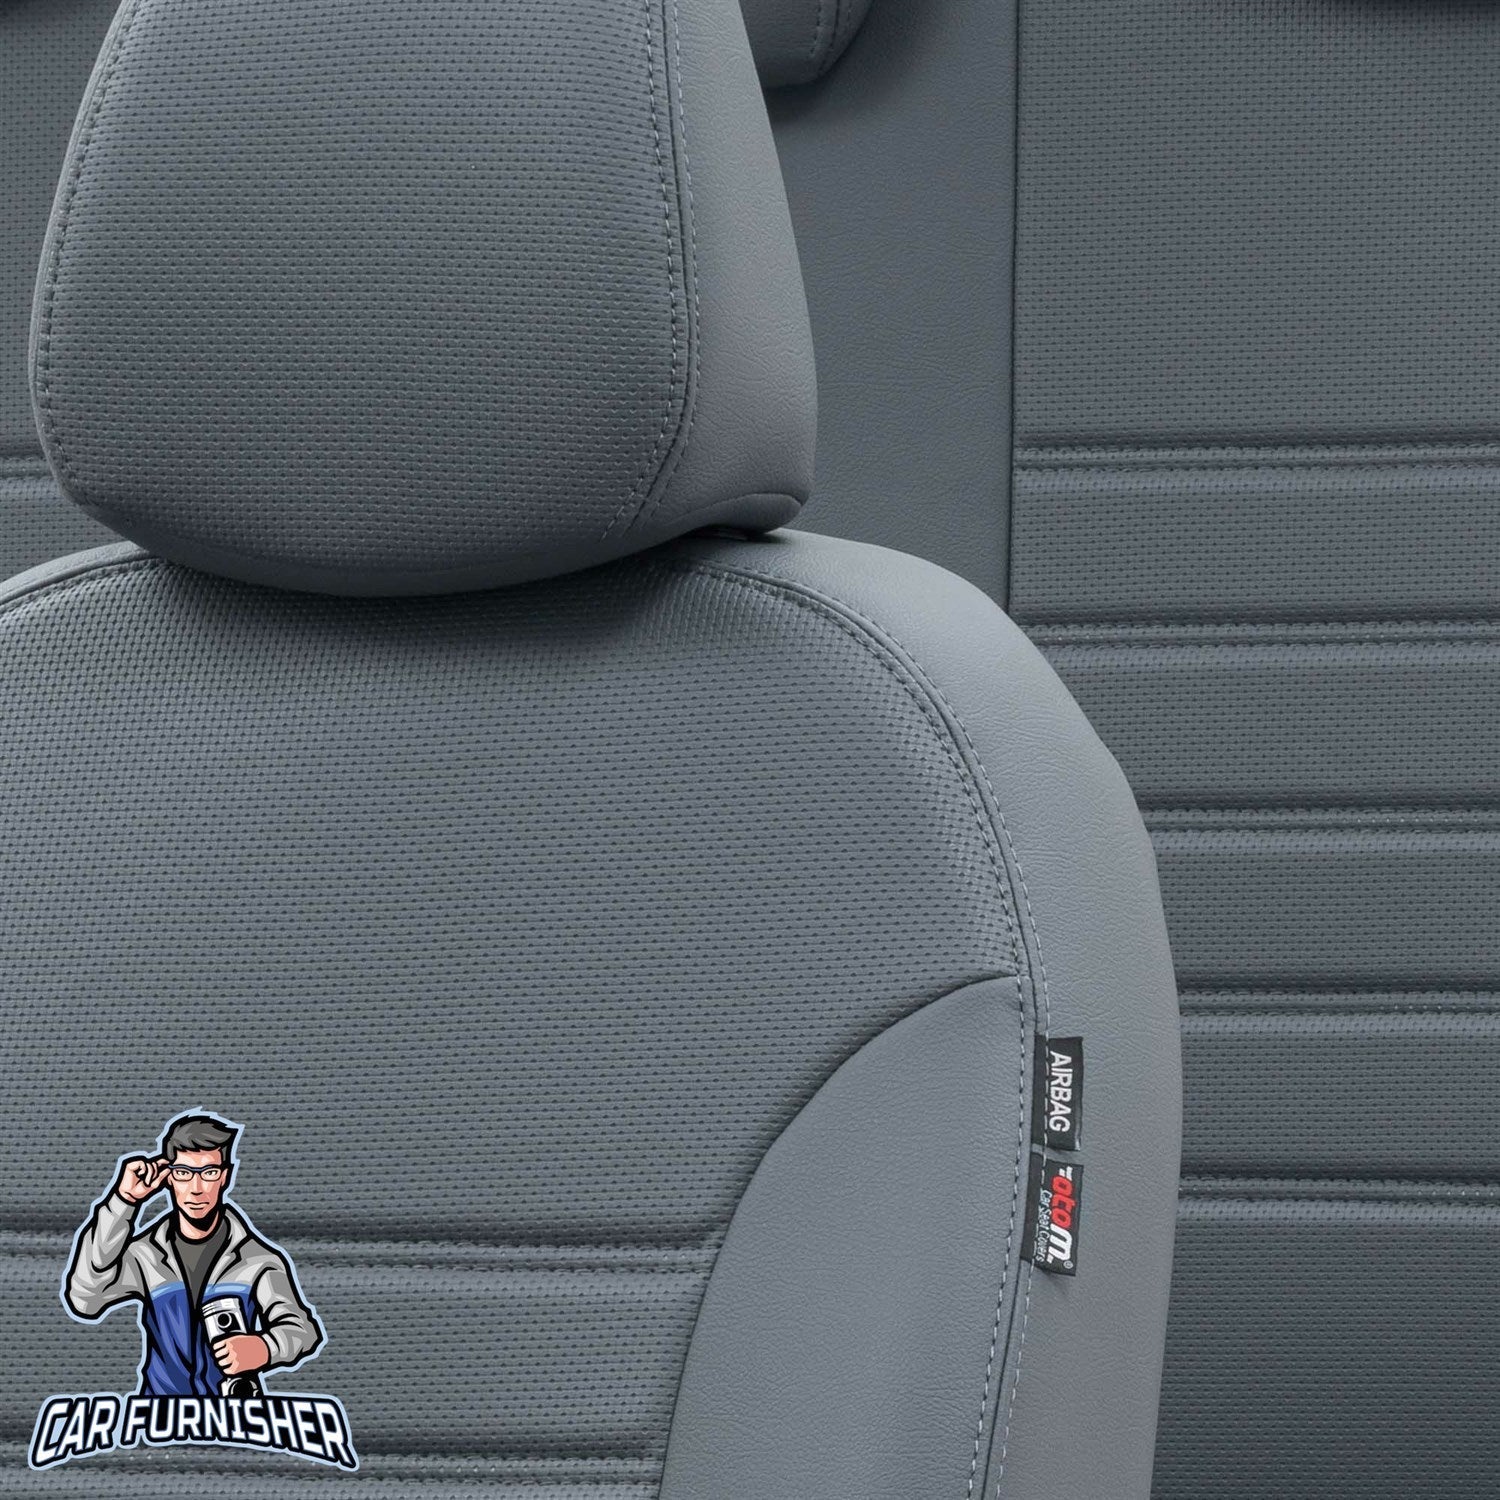 Hyundai Santa Fe Seat Covers New York Leather Design Smoked Leather